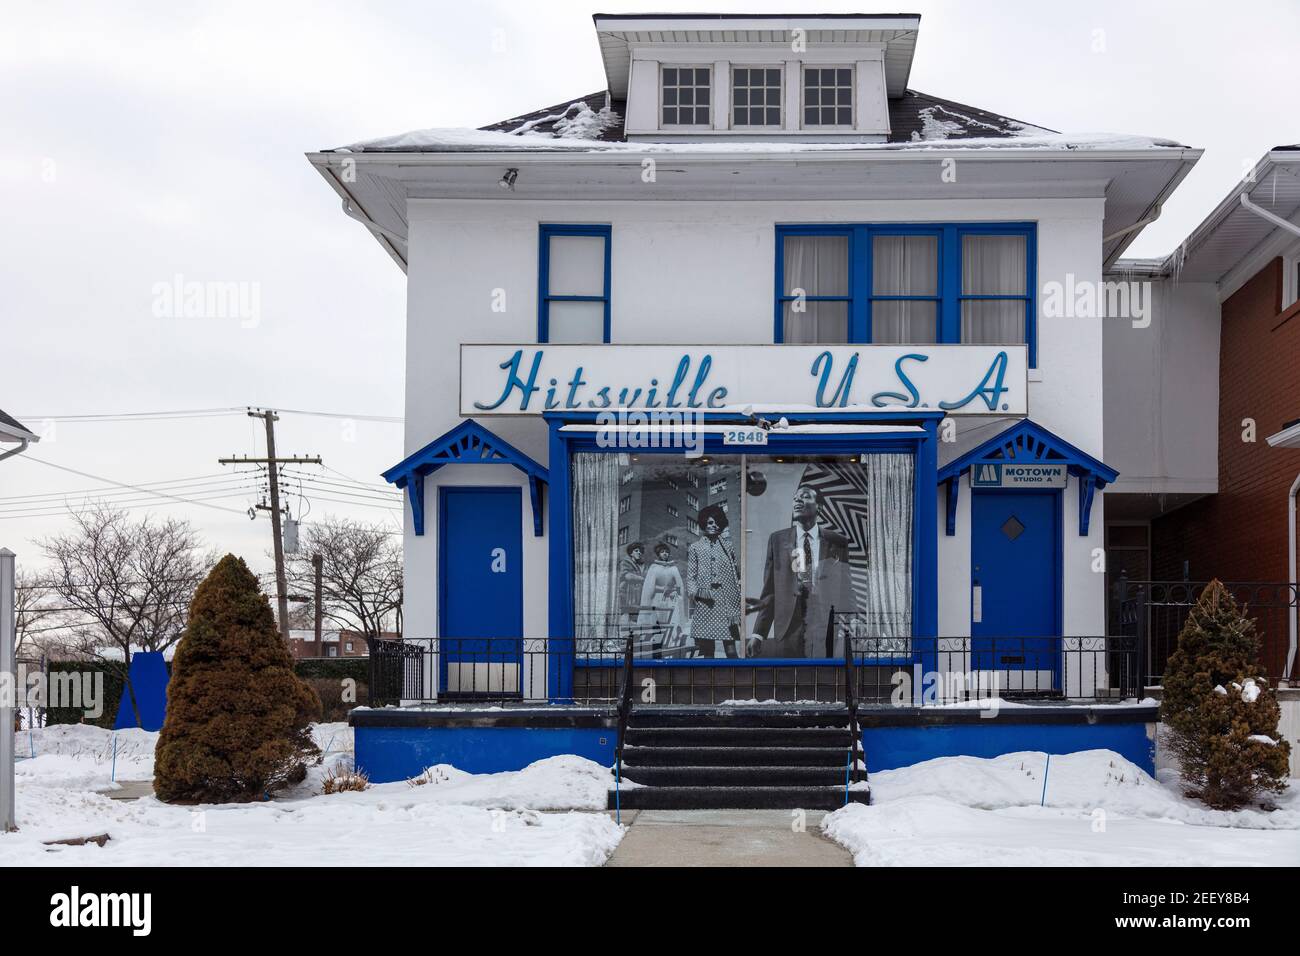 Hitsville, USA, Motown, Detroit, Michigan, USA, von James D. Coppinger/Dembinsky Photo Assoc Stockfoto